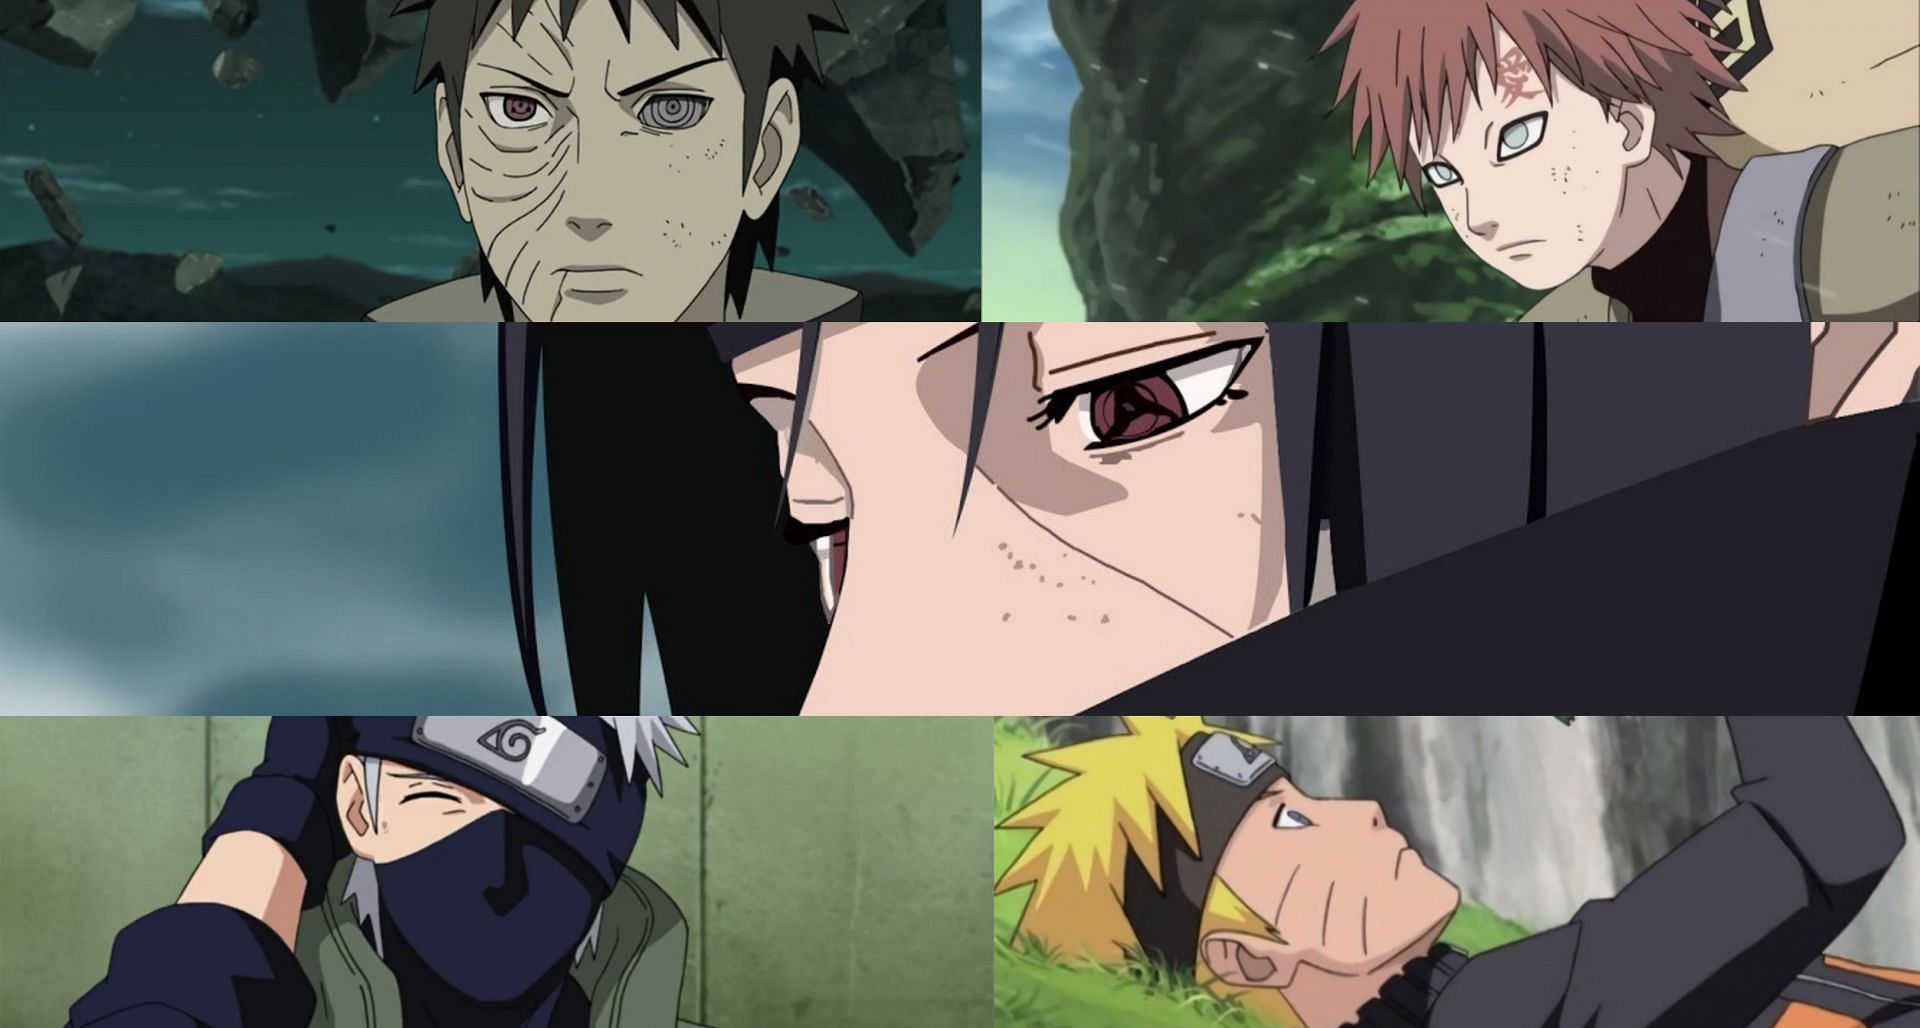 Naruto and others (image via Sportskeeda)